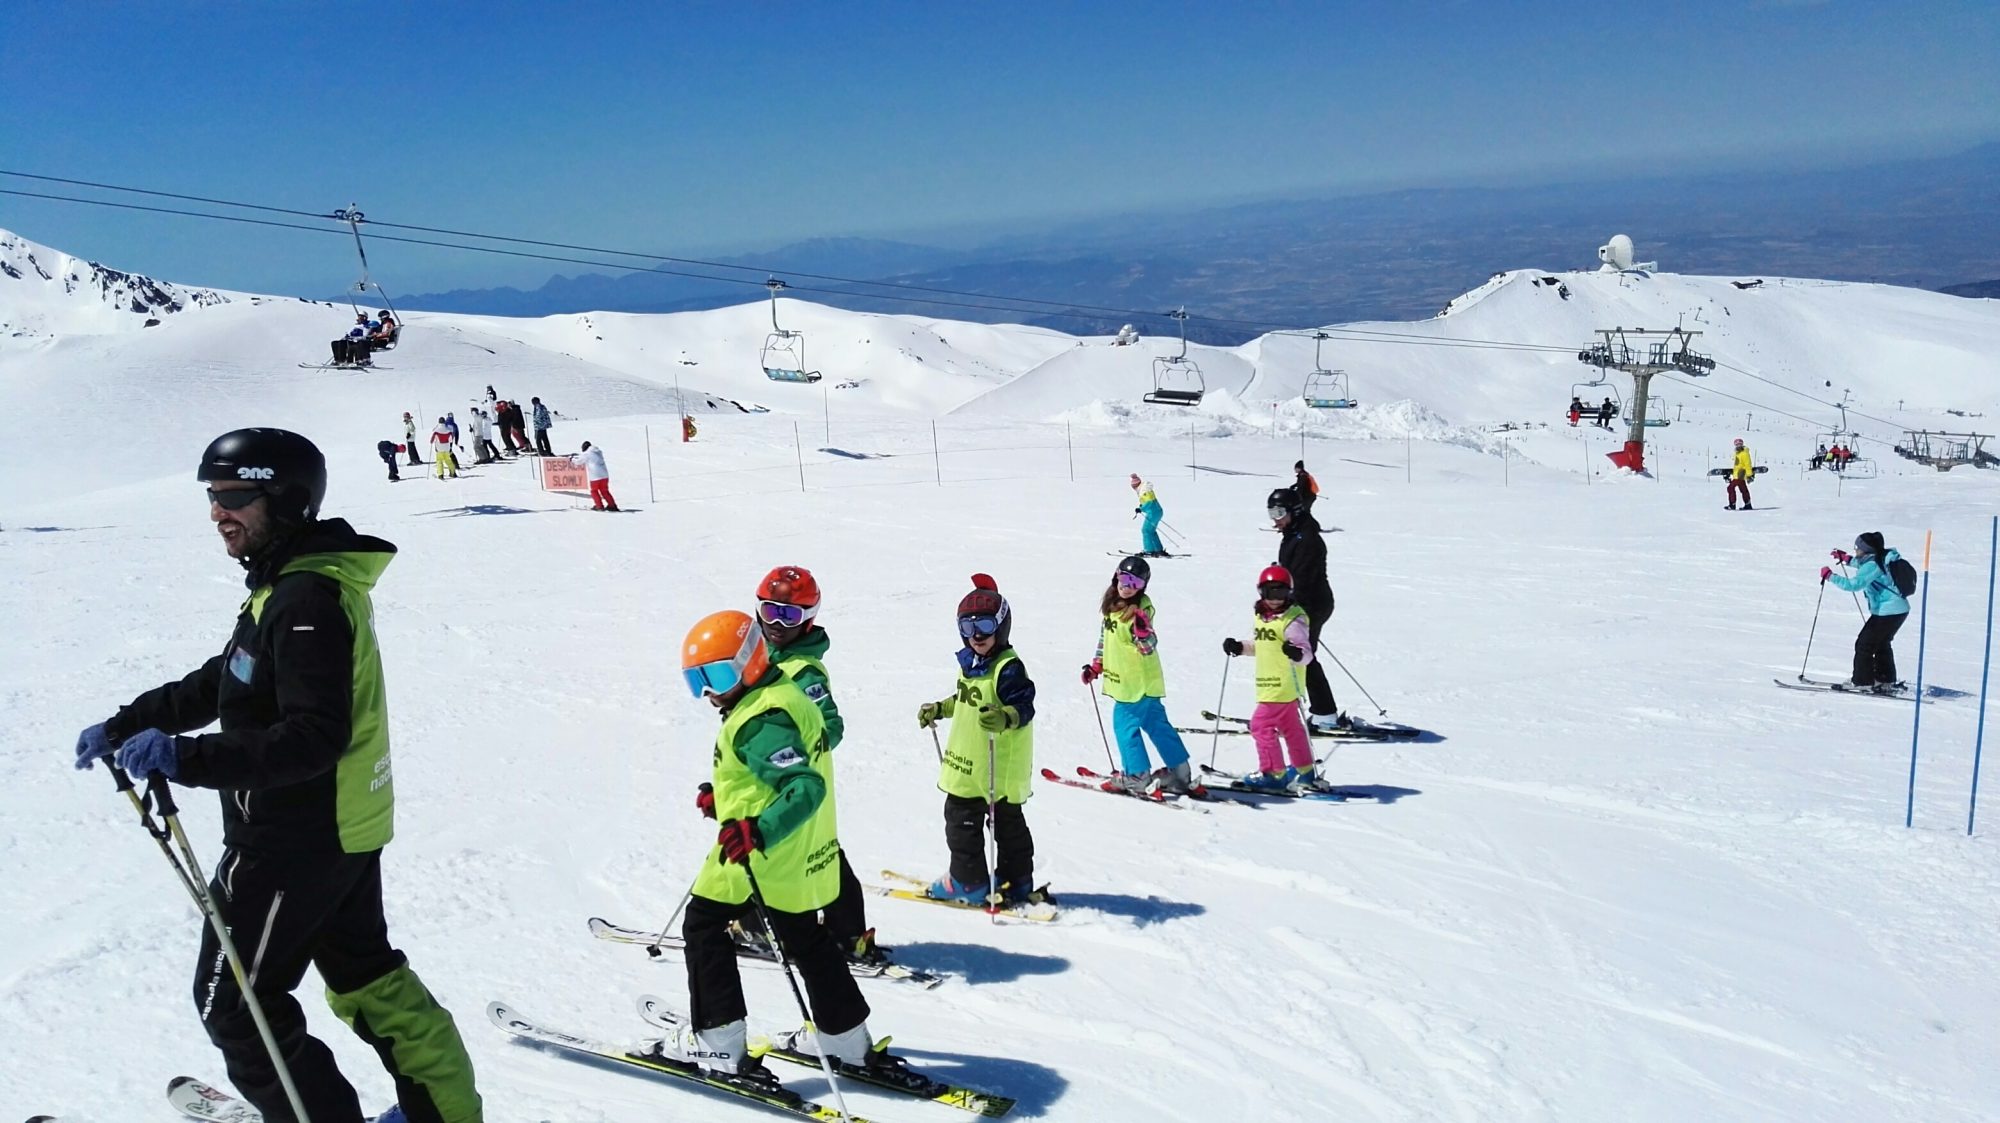 Sierra Nevada has 70 km of open pistes until the end of this ski season. Borreguiles area.